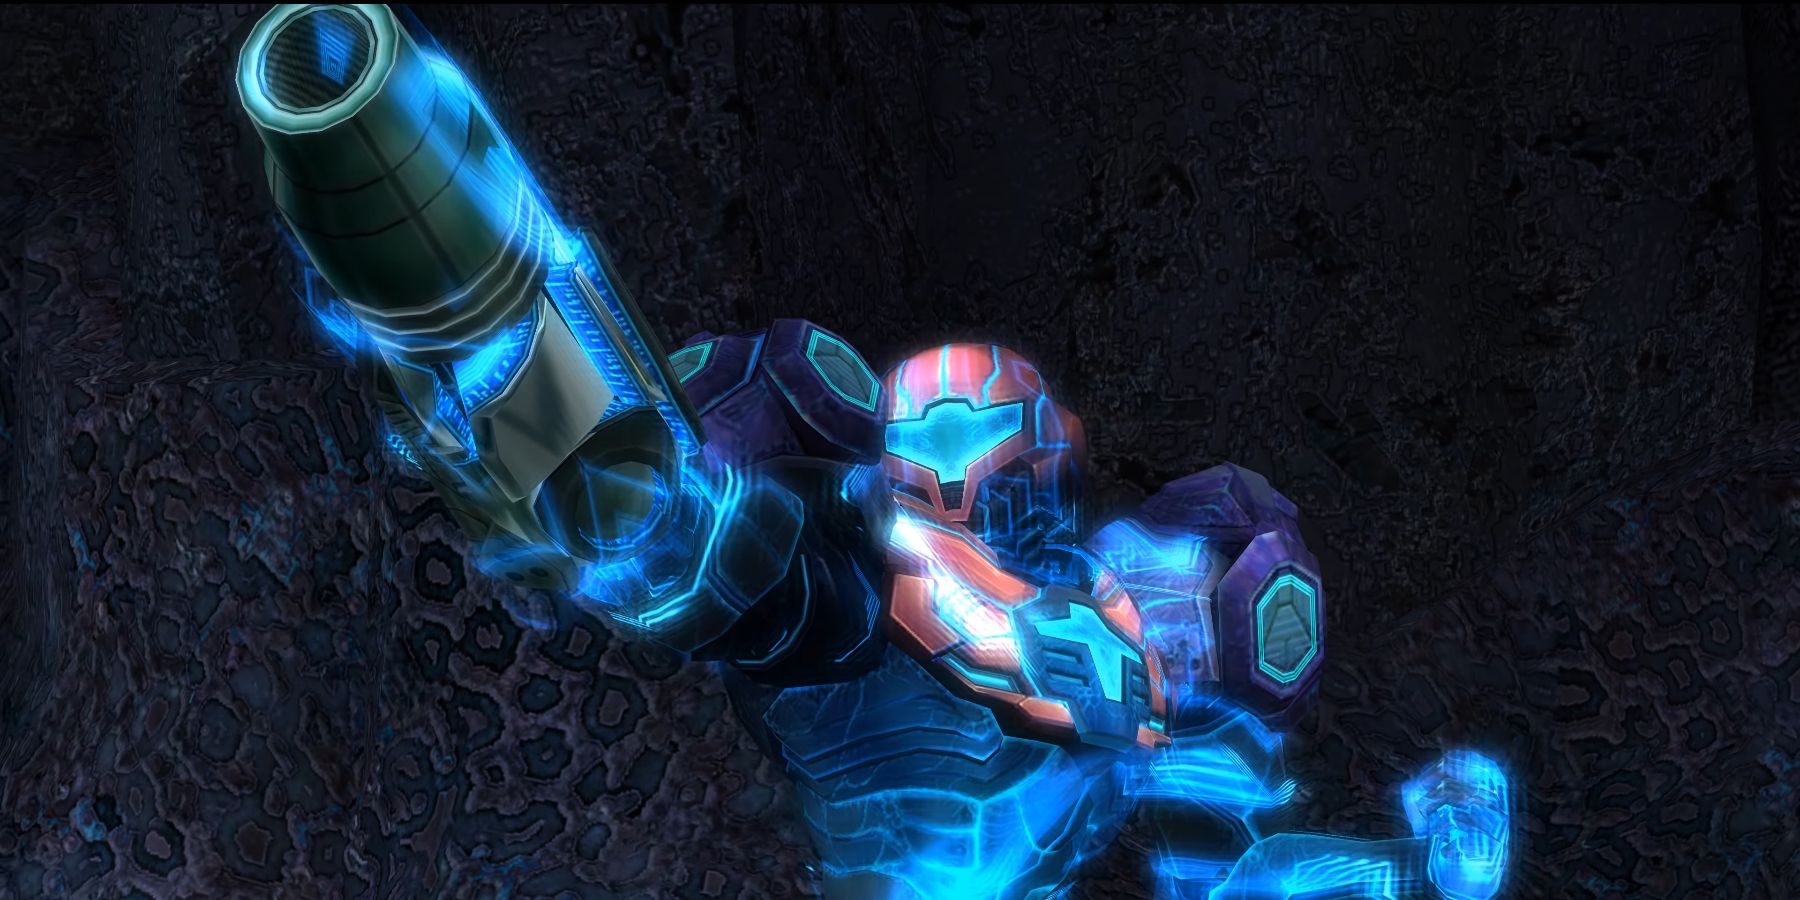 Samus Aran aiming her arm blaster in the Hazard Shield Suit in Metroid Prime 3 Corruption